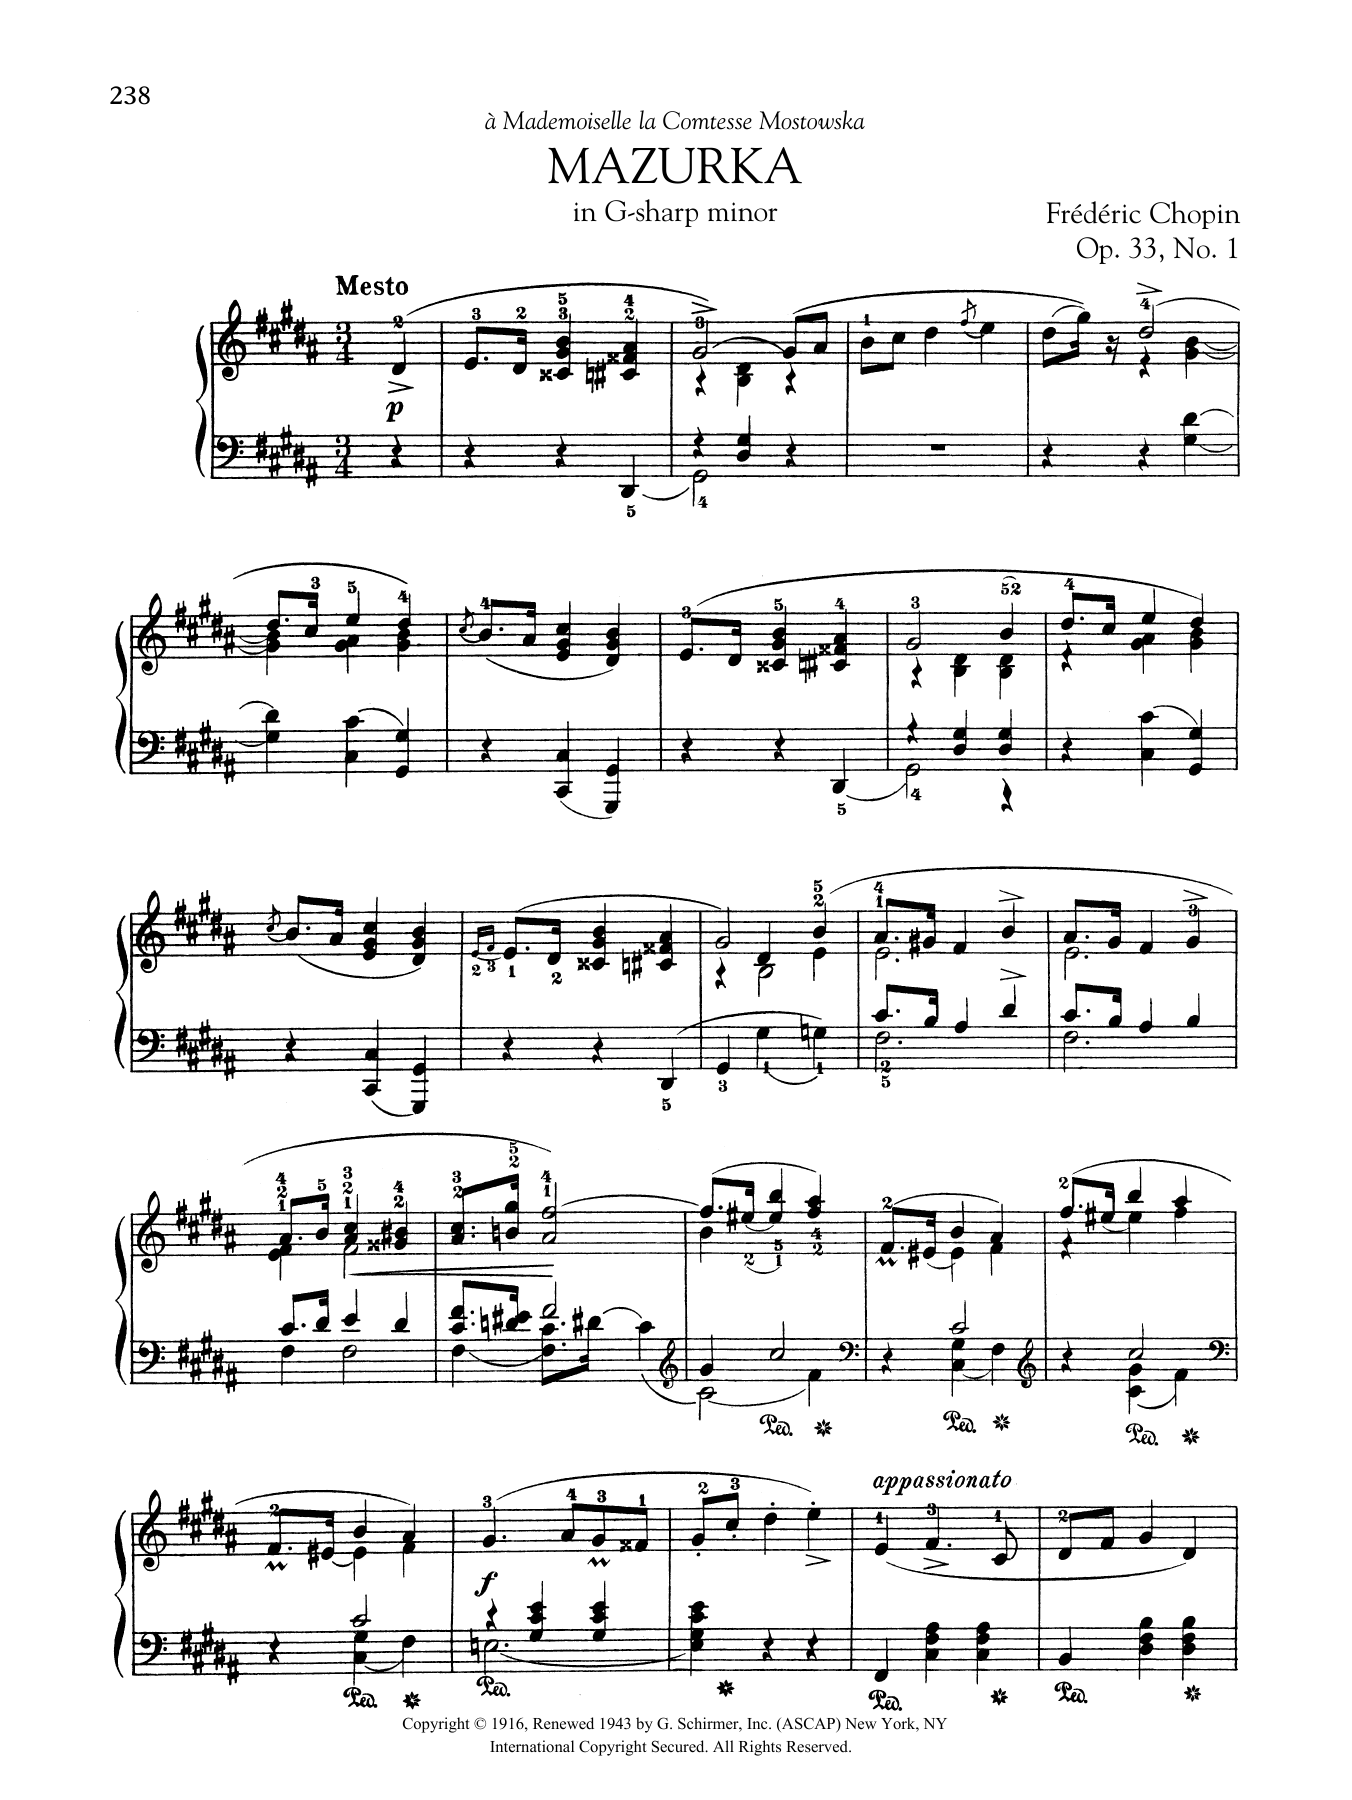 Mazurka in G-sharp minor, Op. 33, No. 1 sheet music